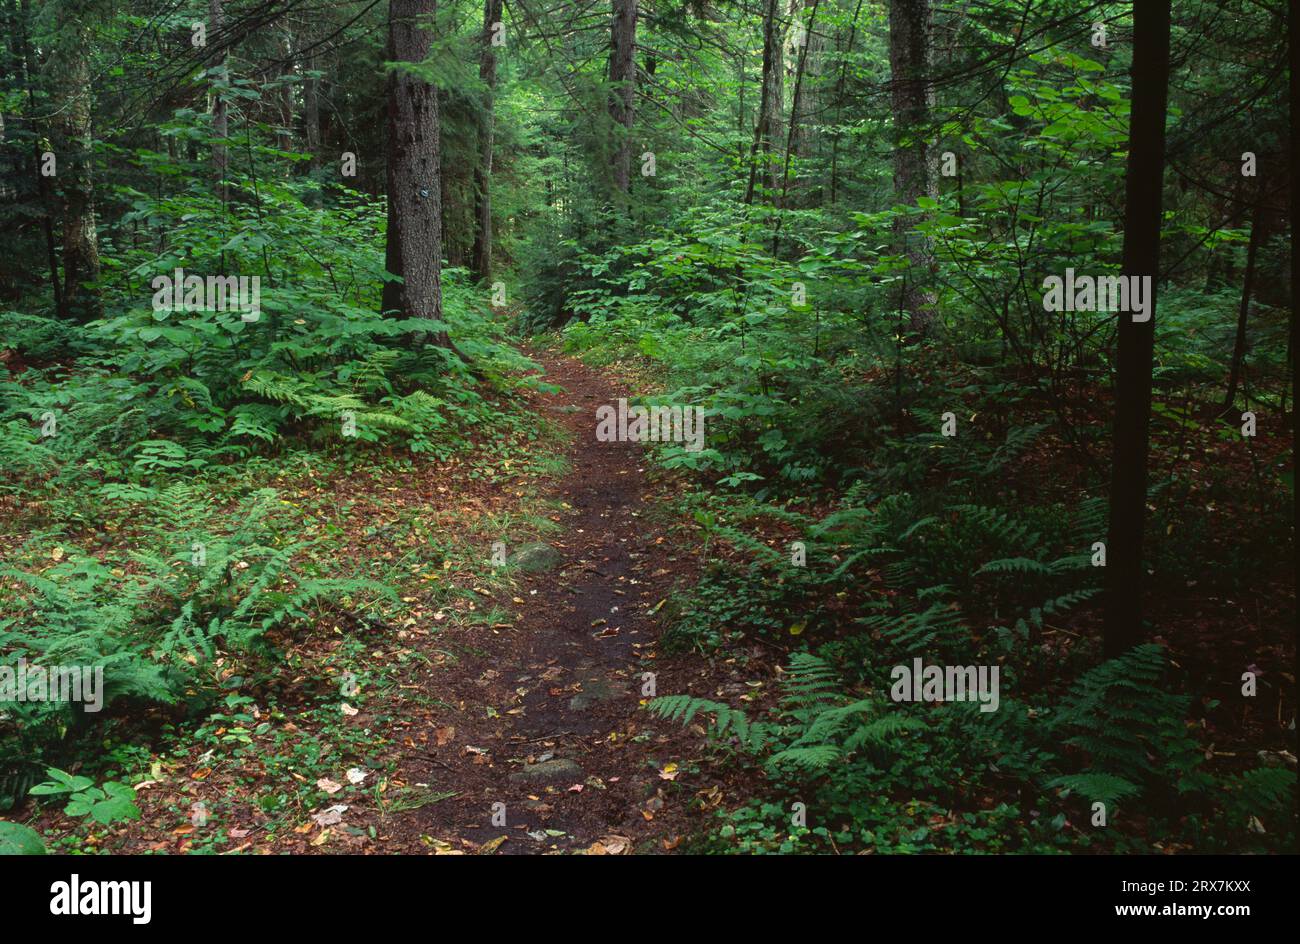 Northville-Placid Trail, West Canada Lake Wilderness Area, Adirondack Park, New York Stock Photo